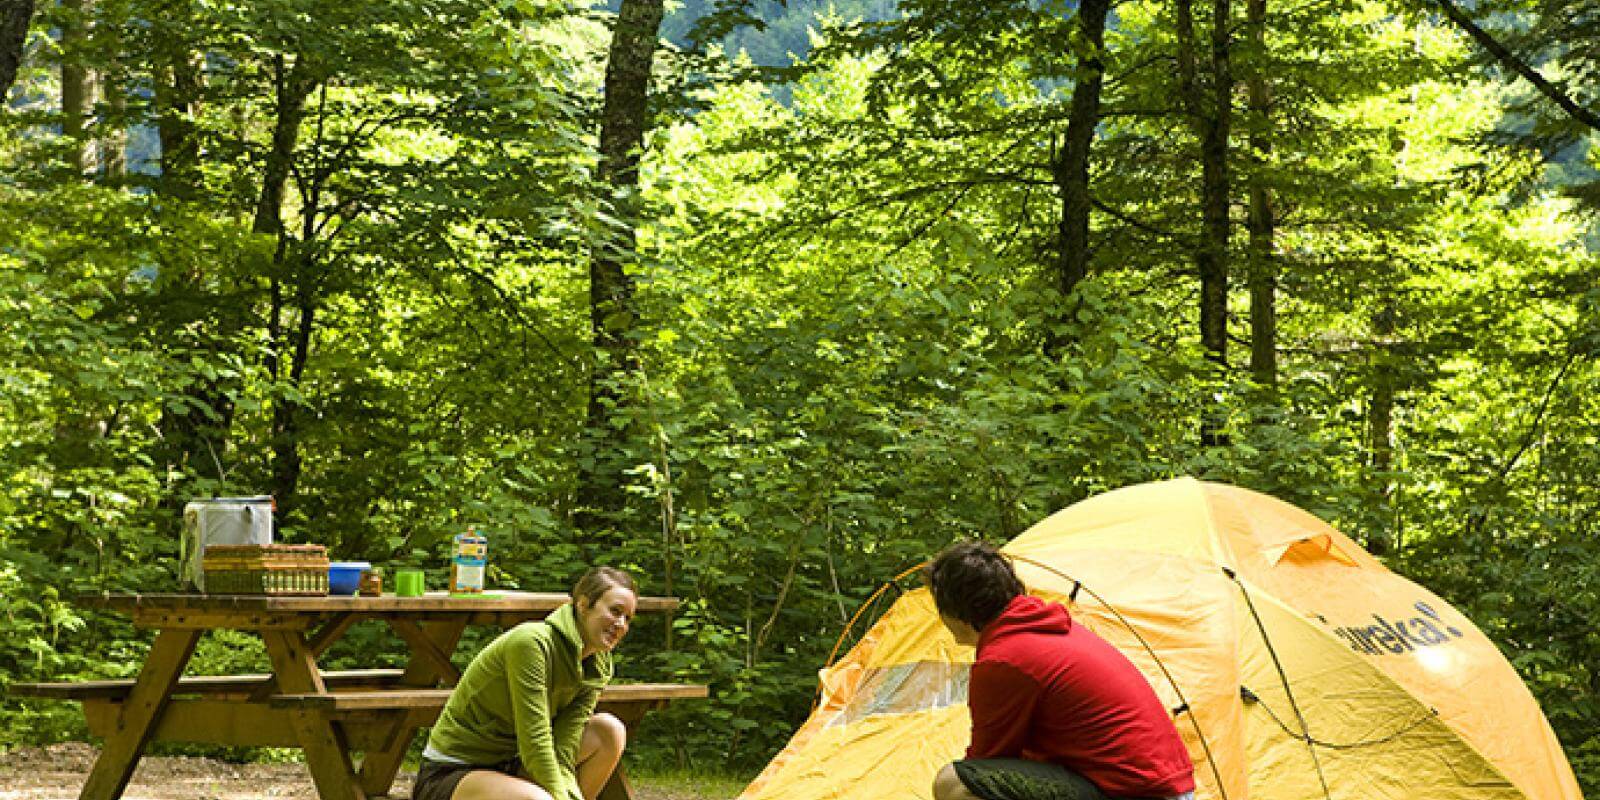 Only camping. Палатка туристическая. Палатка в лесу. Кемпинг на природе. Туризм с палатками.